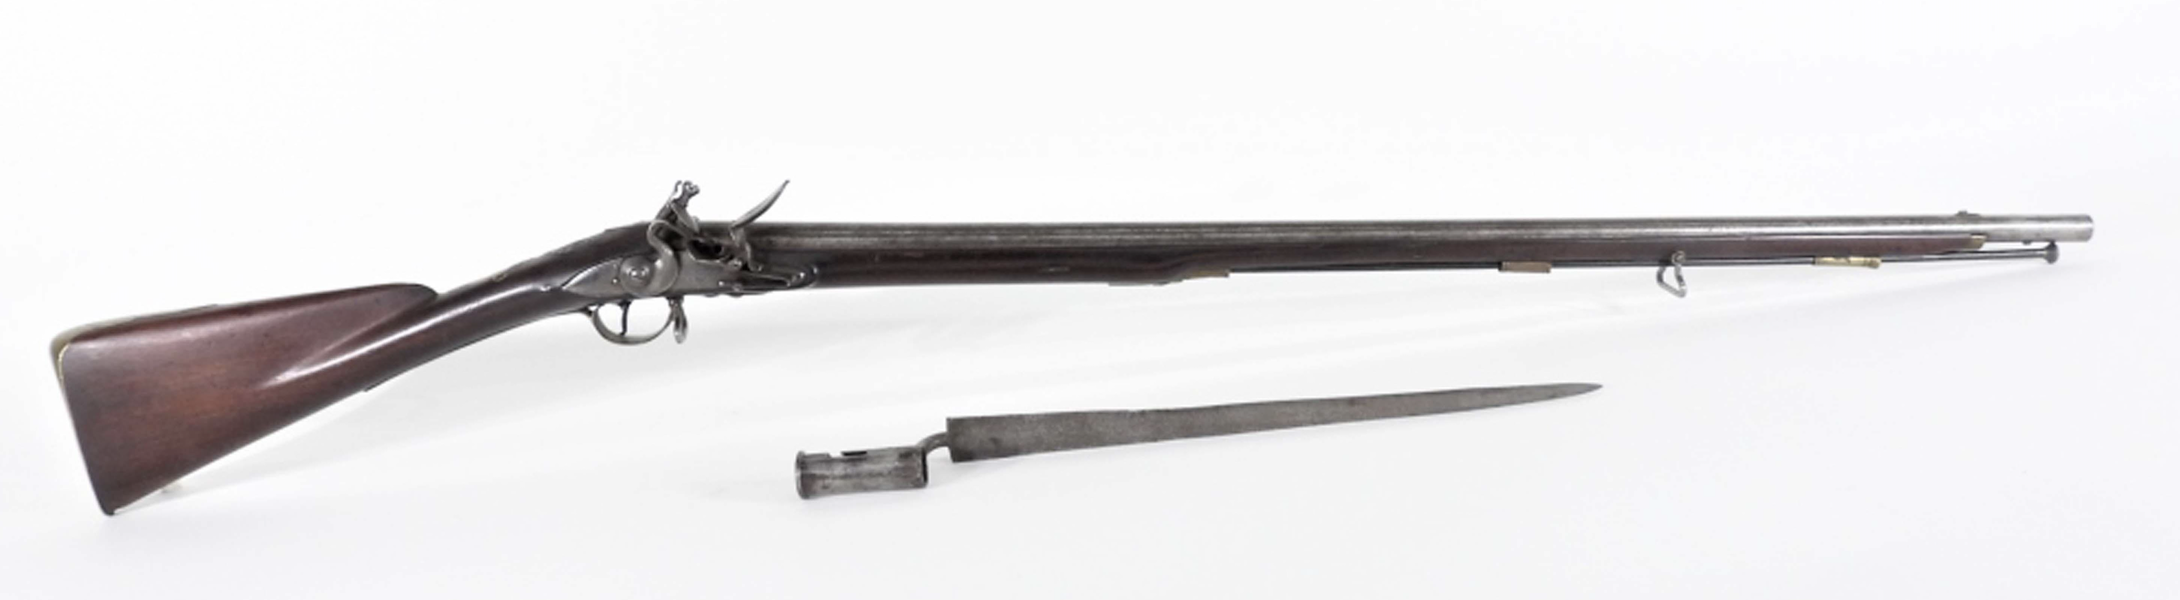 Circa-1770s British officer’s fusil (flintlock musket) and bayonet by Sharp, estimated at $3,000-$5,000